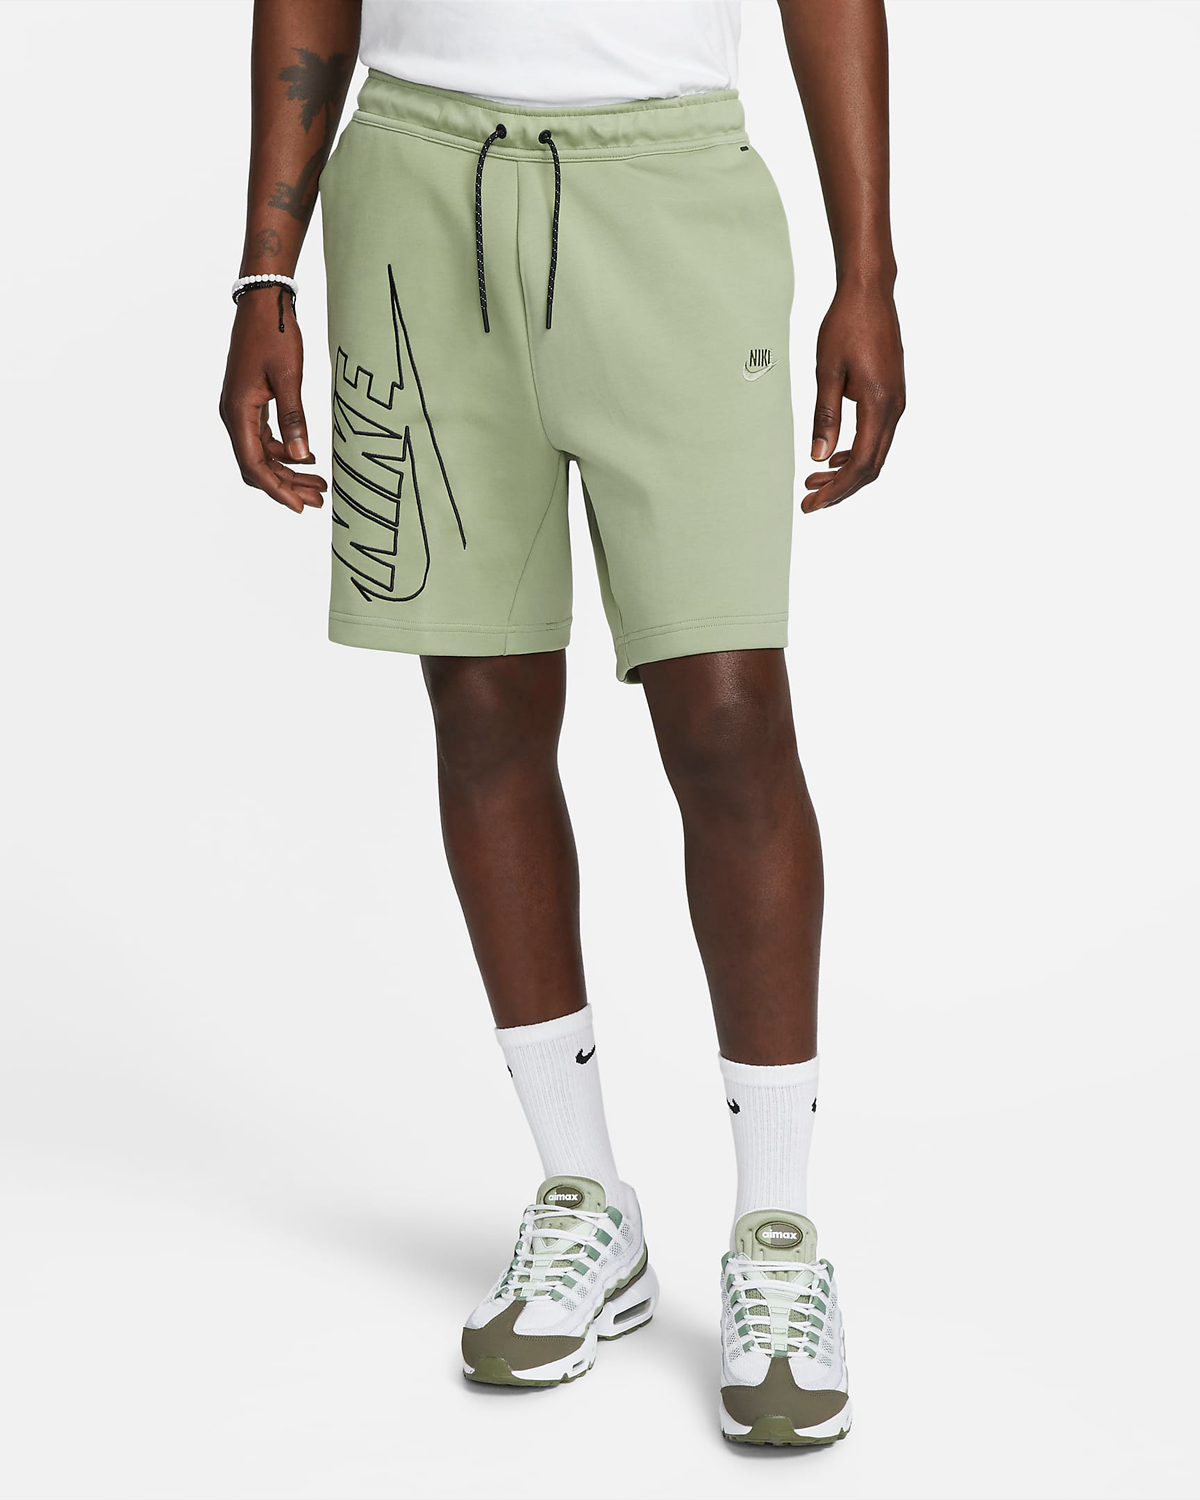 Nike-Tech-Fleece-Graphic-Shorts-Oil-Green-1